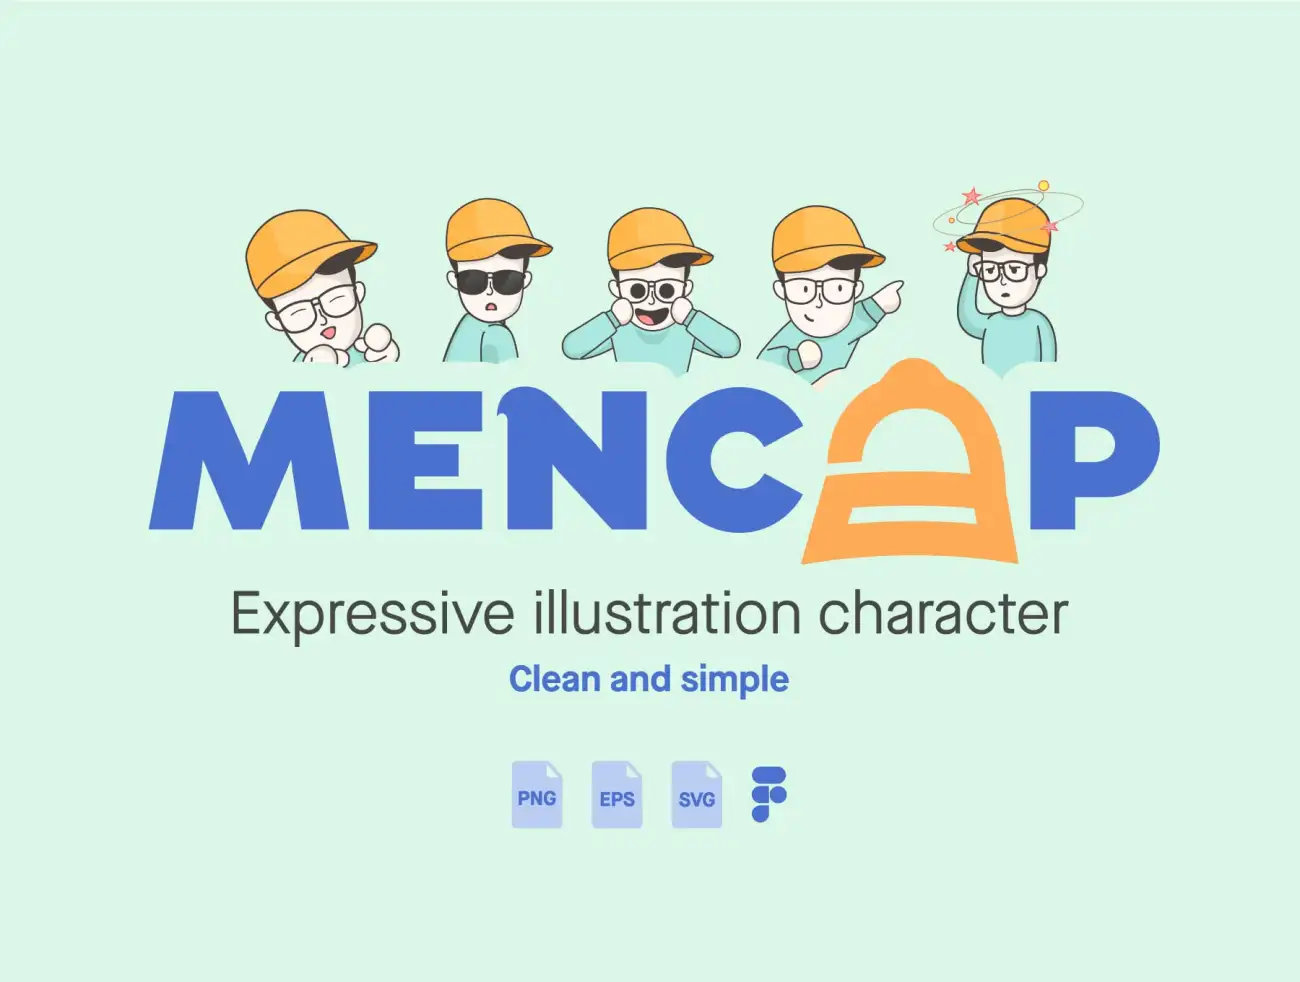 15款带帽人物角色矢量插画素材 MENCAP Illustration插图1